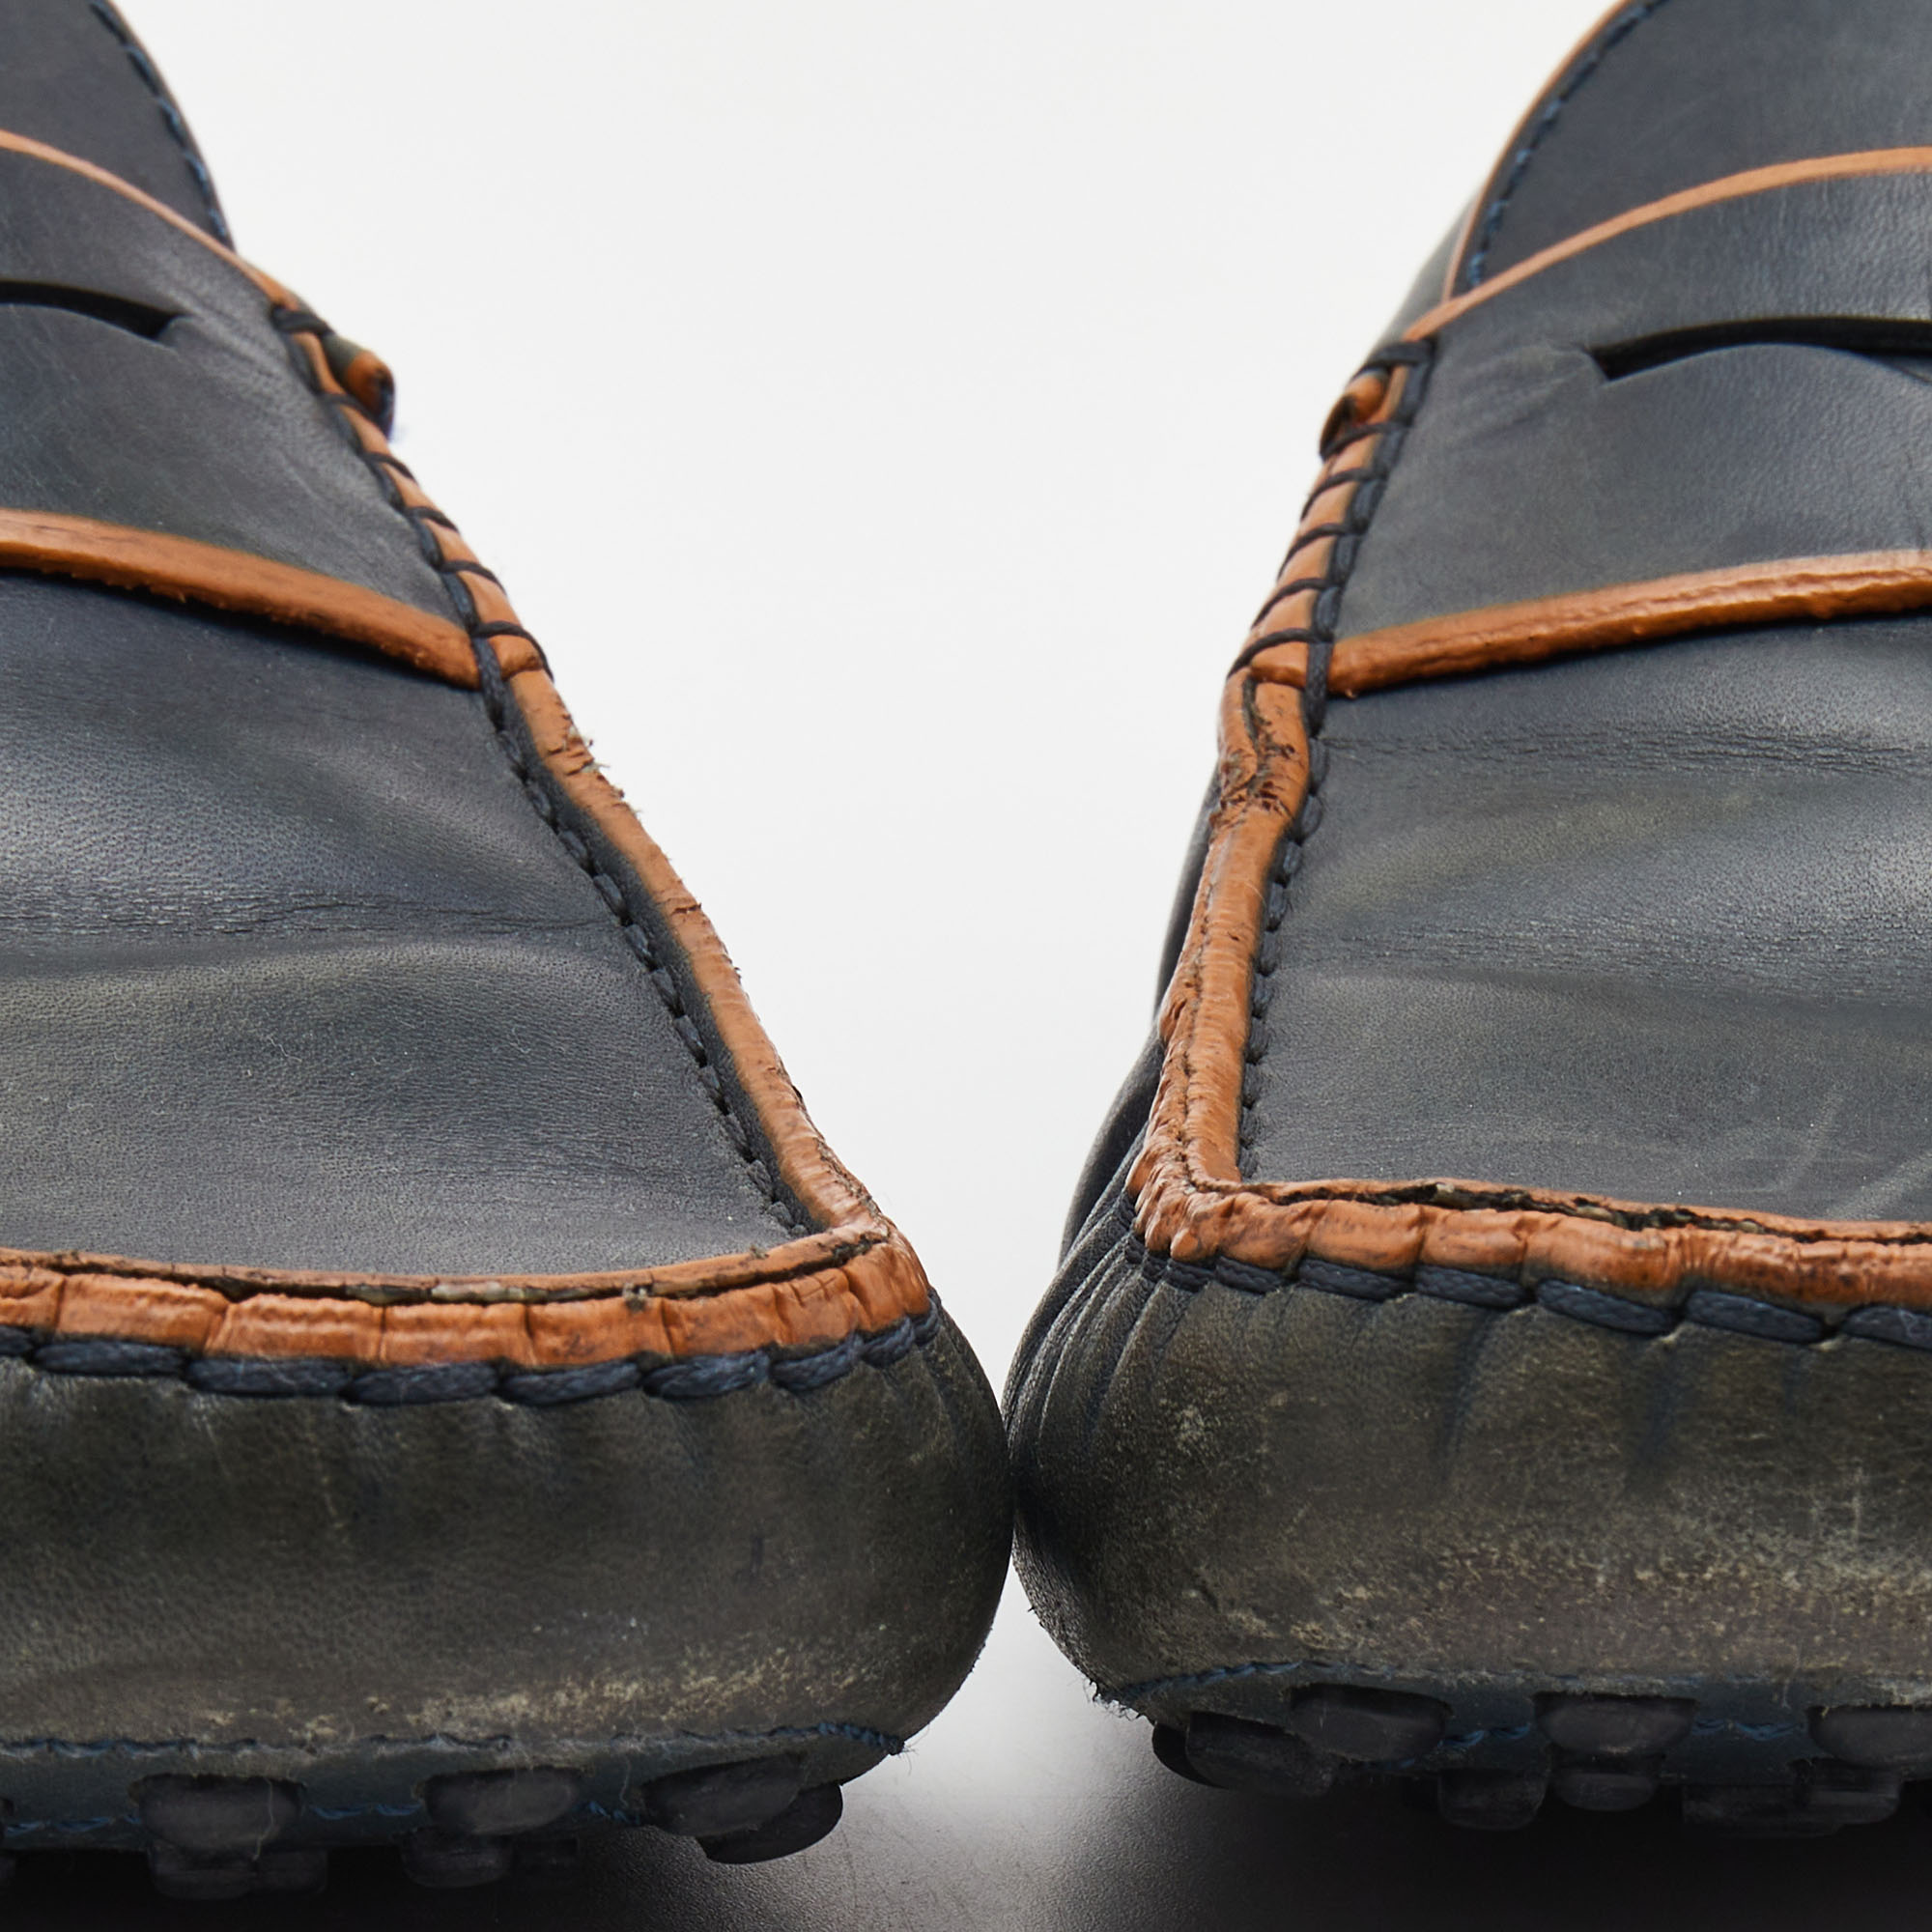 Tod's Dark Grey/Orange Leather Gommino Slip On Loafers Size 42